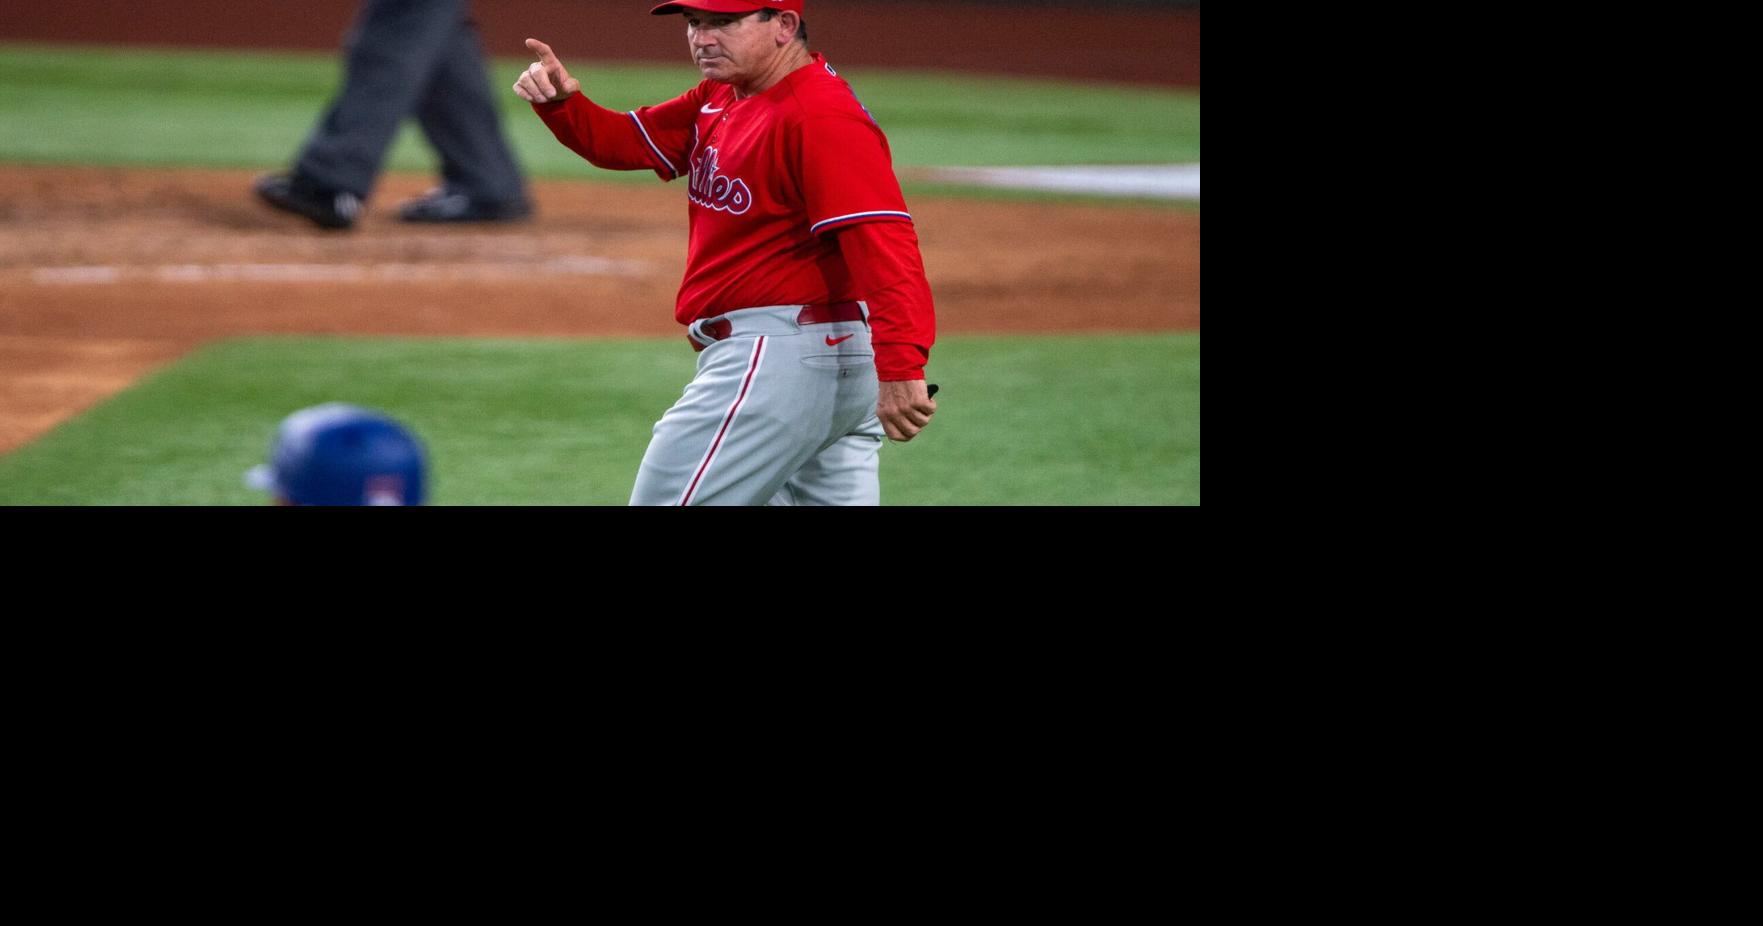 KU baseball's Rob Thomson to manage NL in MLB All-Star Game